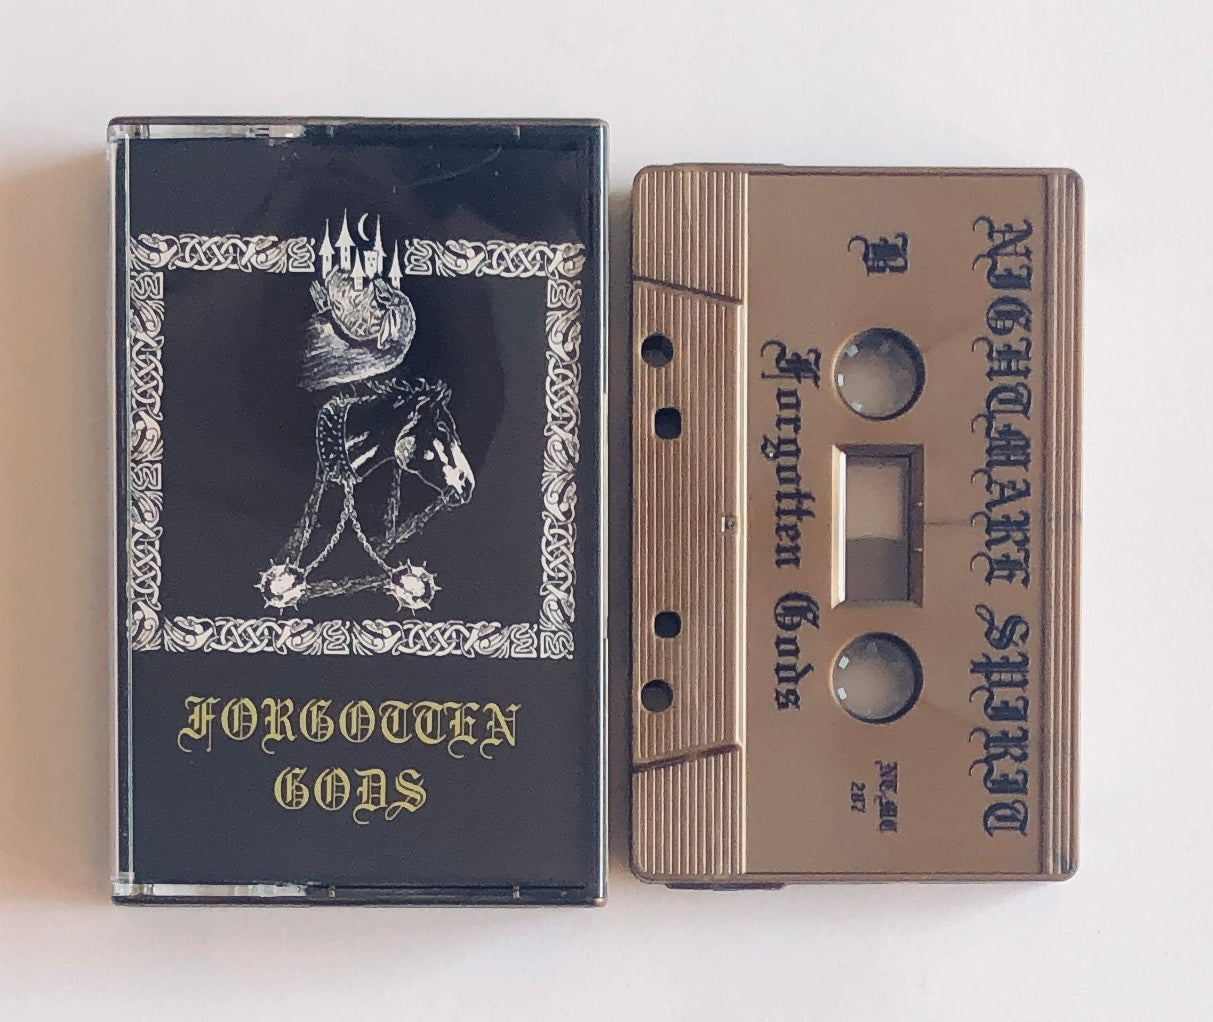 Nightmare Spirit (US) "Forgotten Gods" - Pro Tape